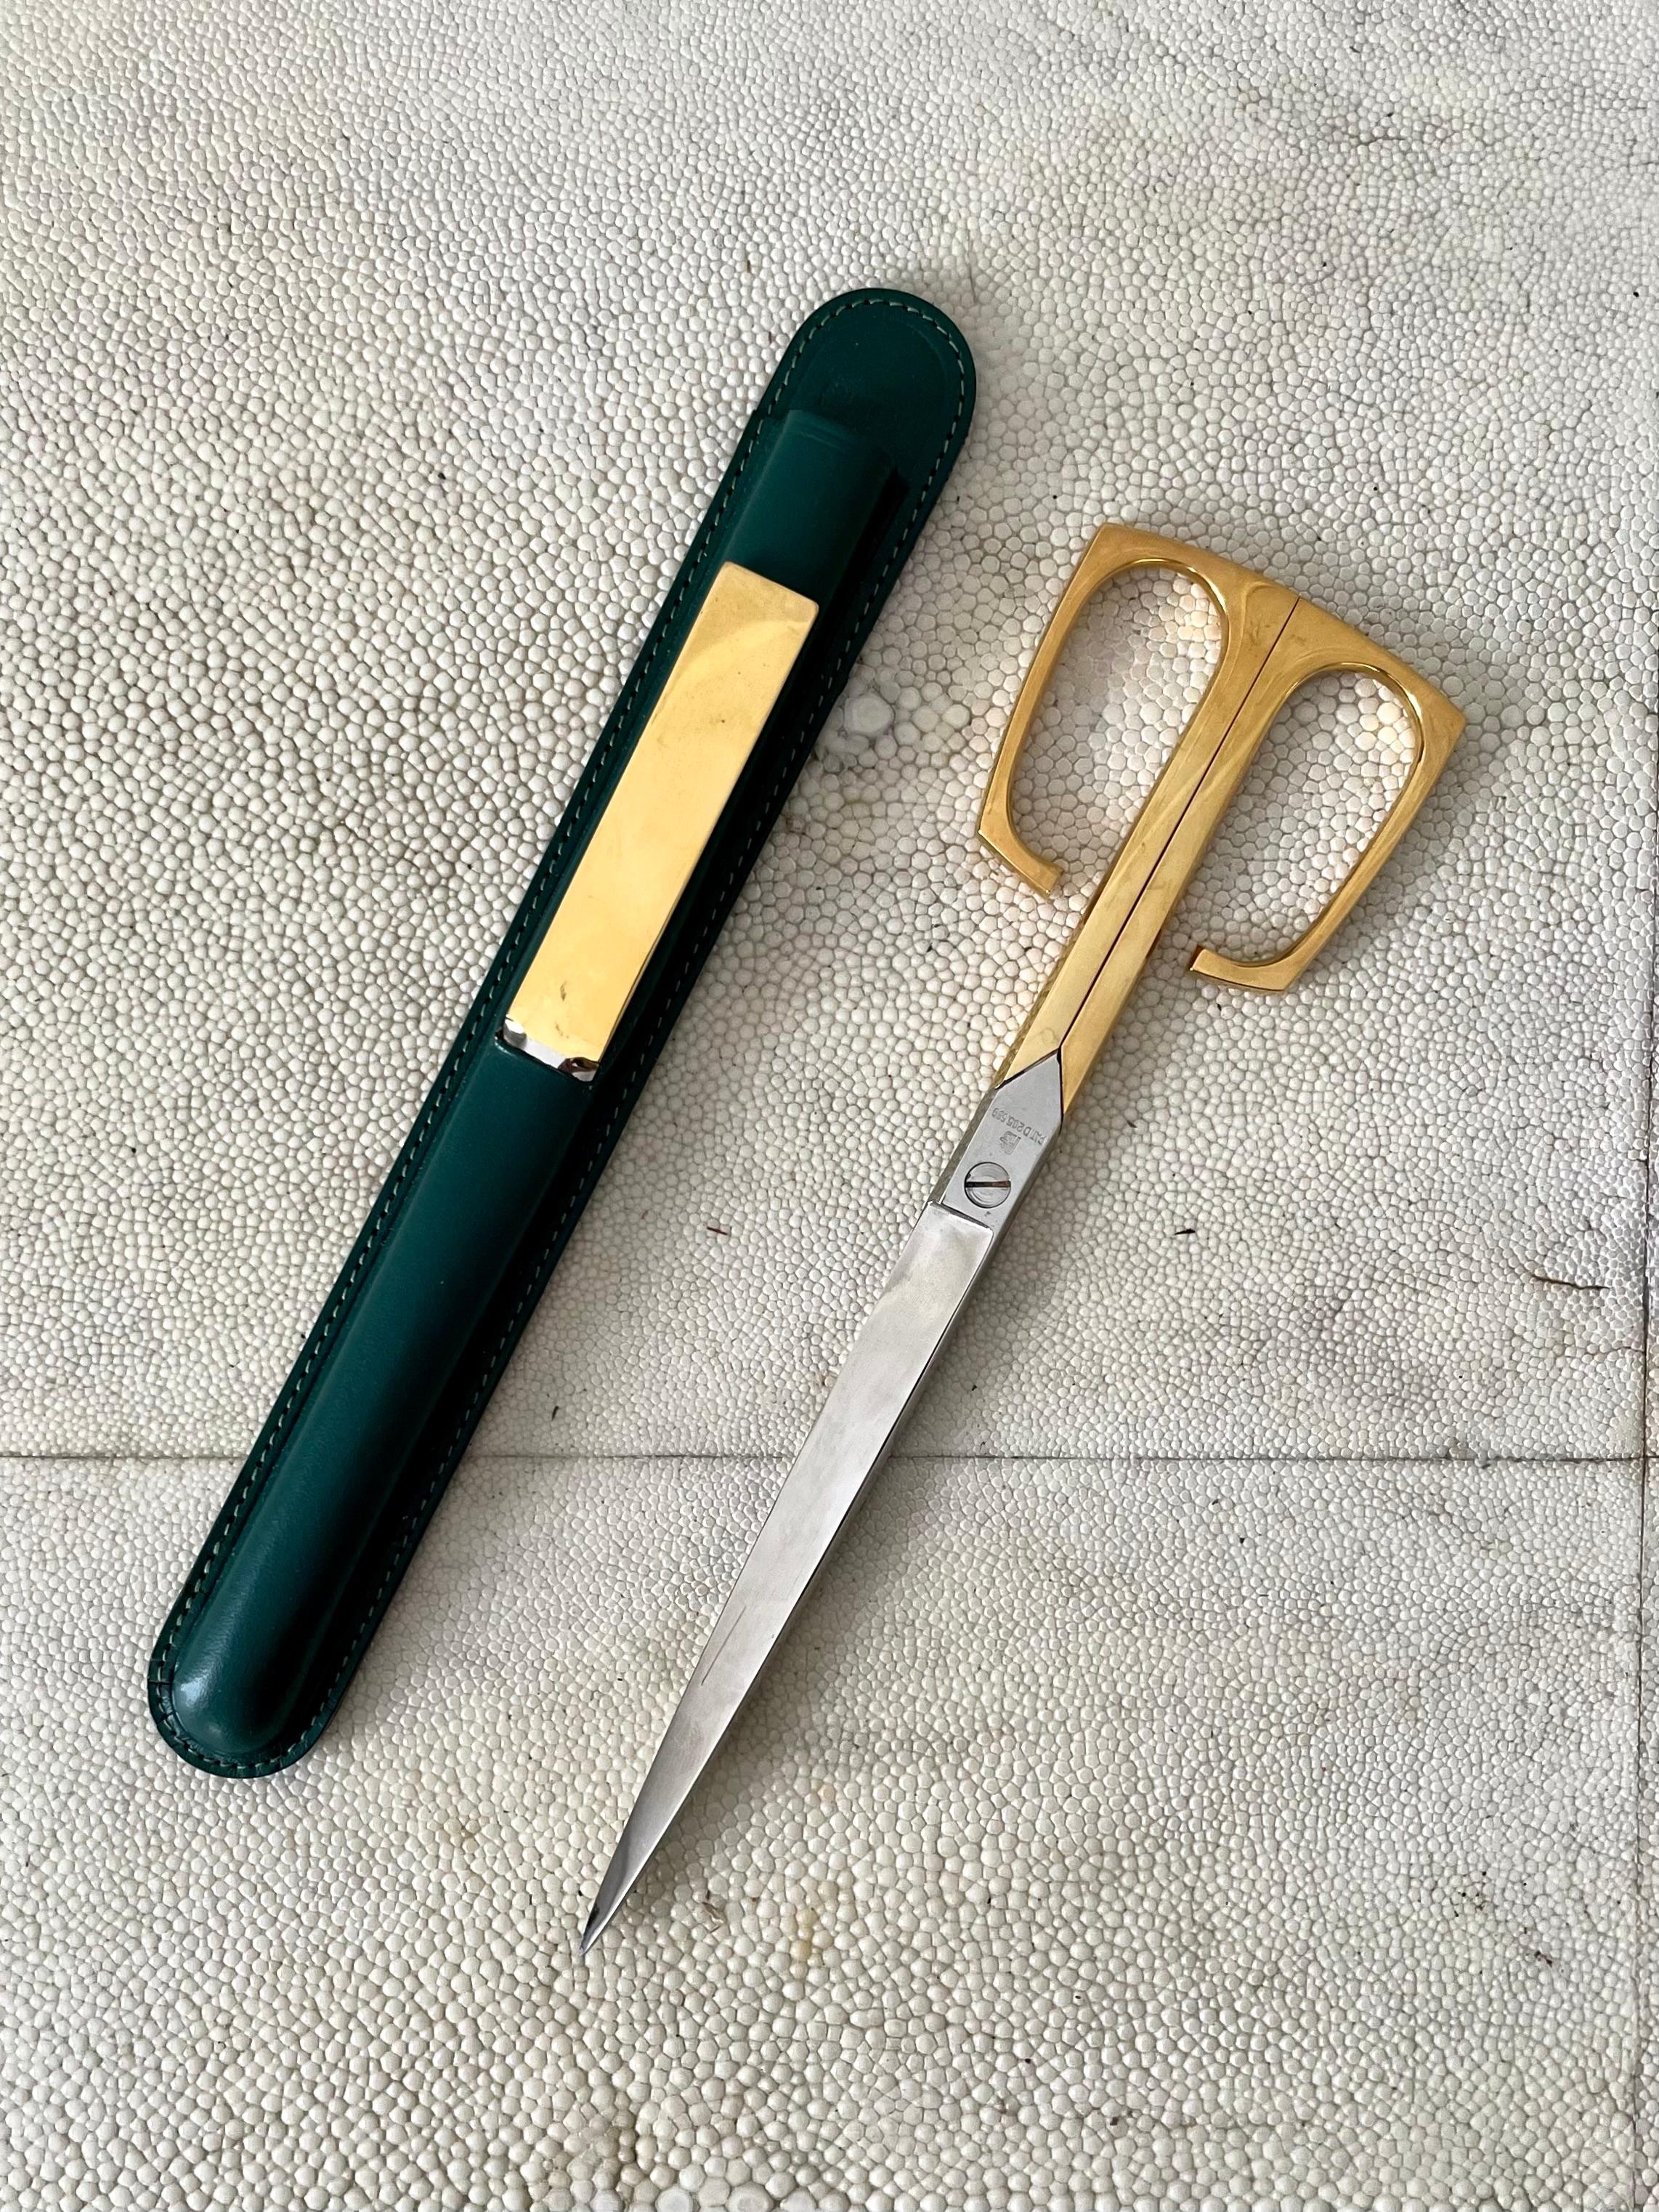 Mid-Century Modern Solingen Scissors and Letter Opener in Green Leather Case